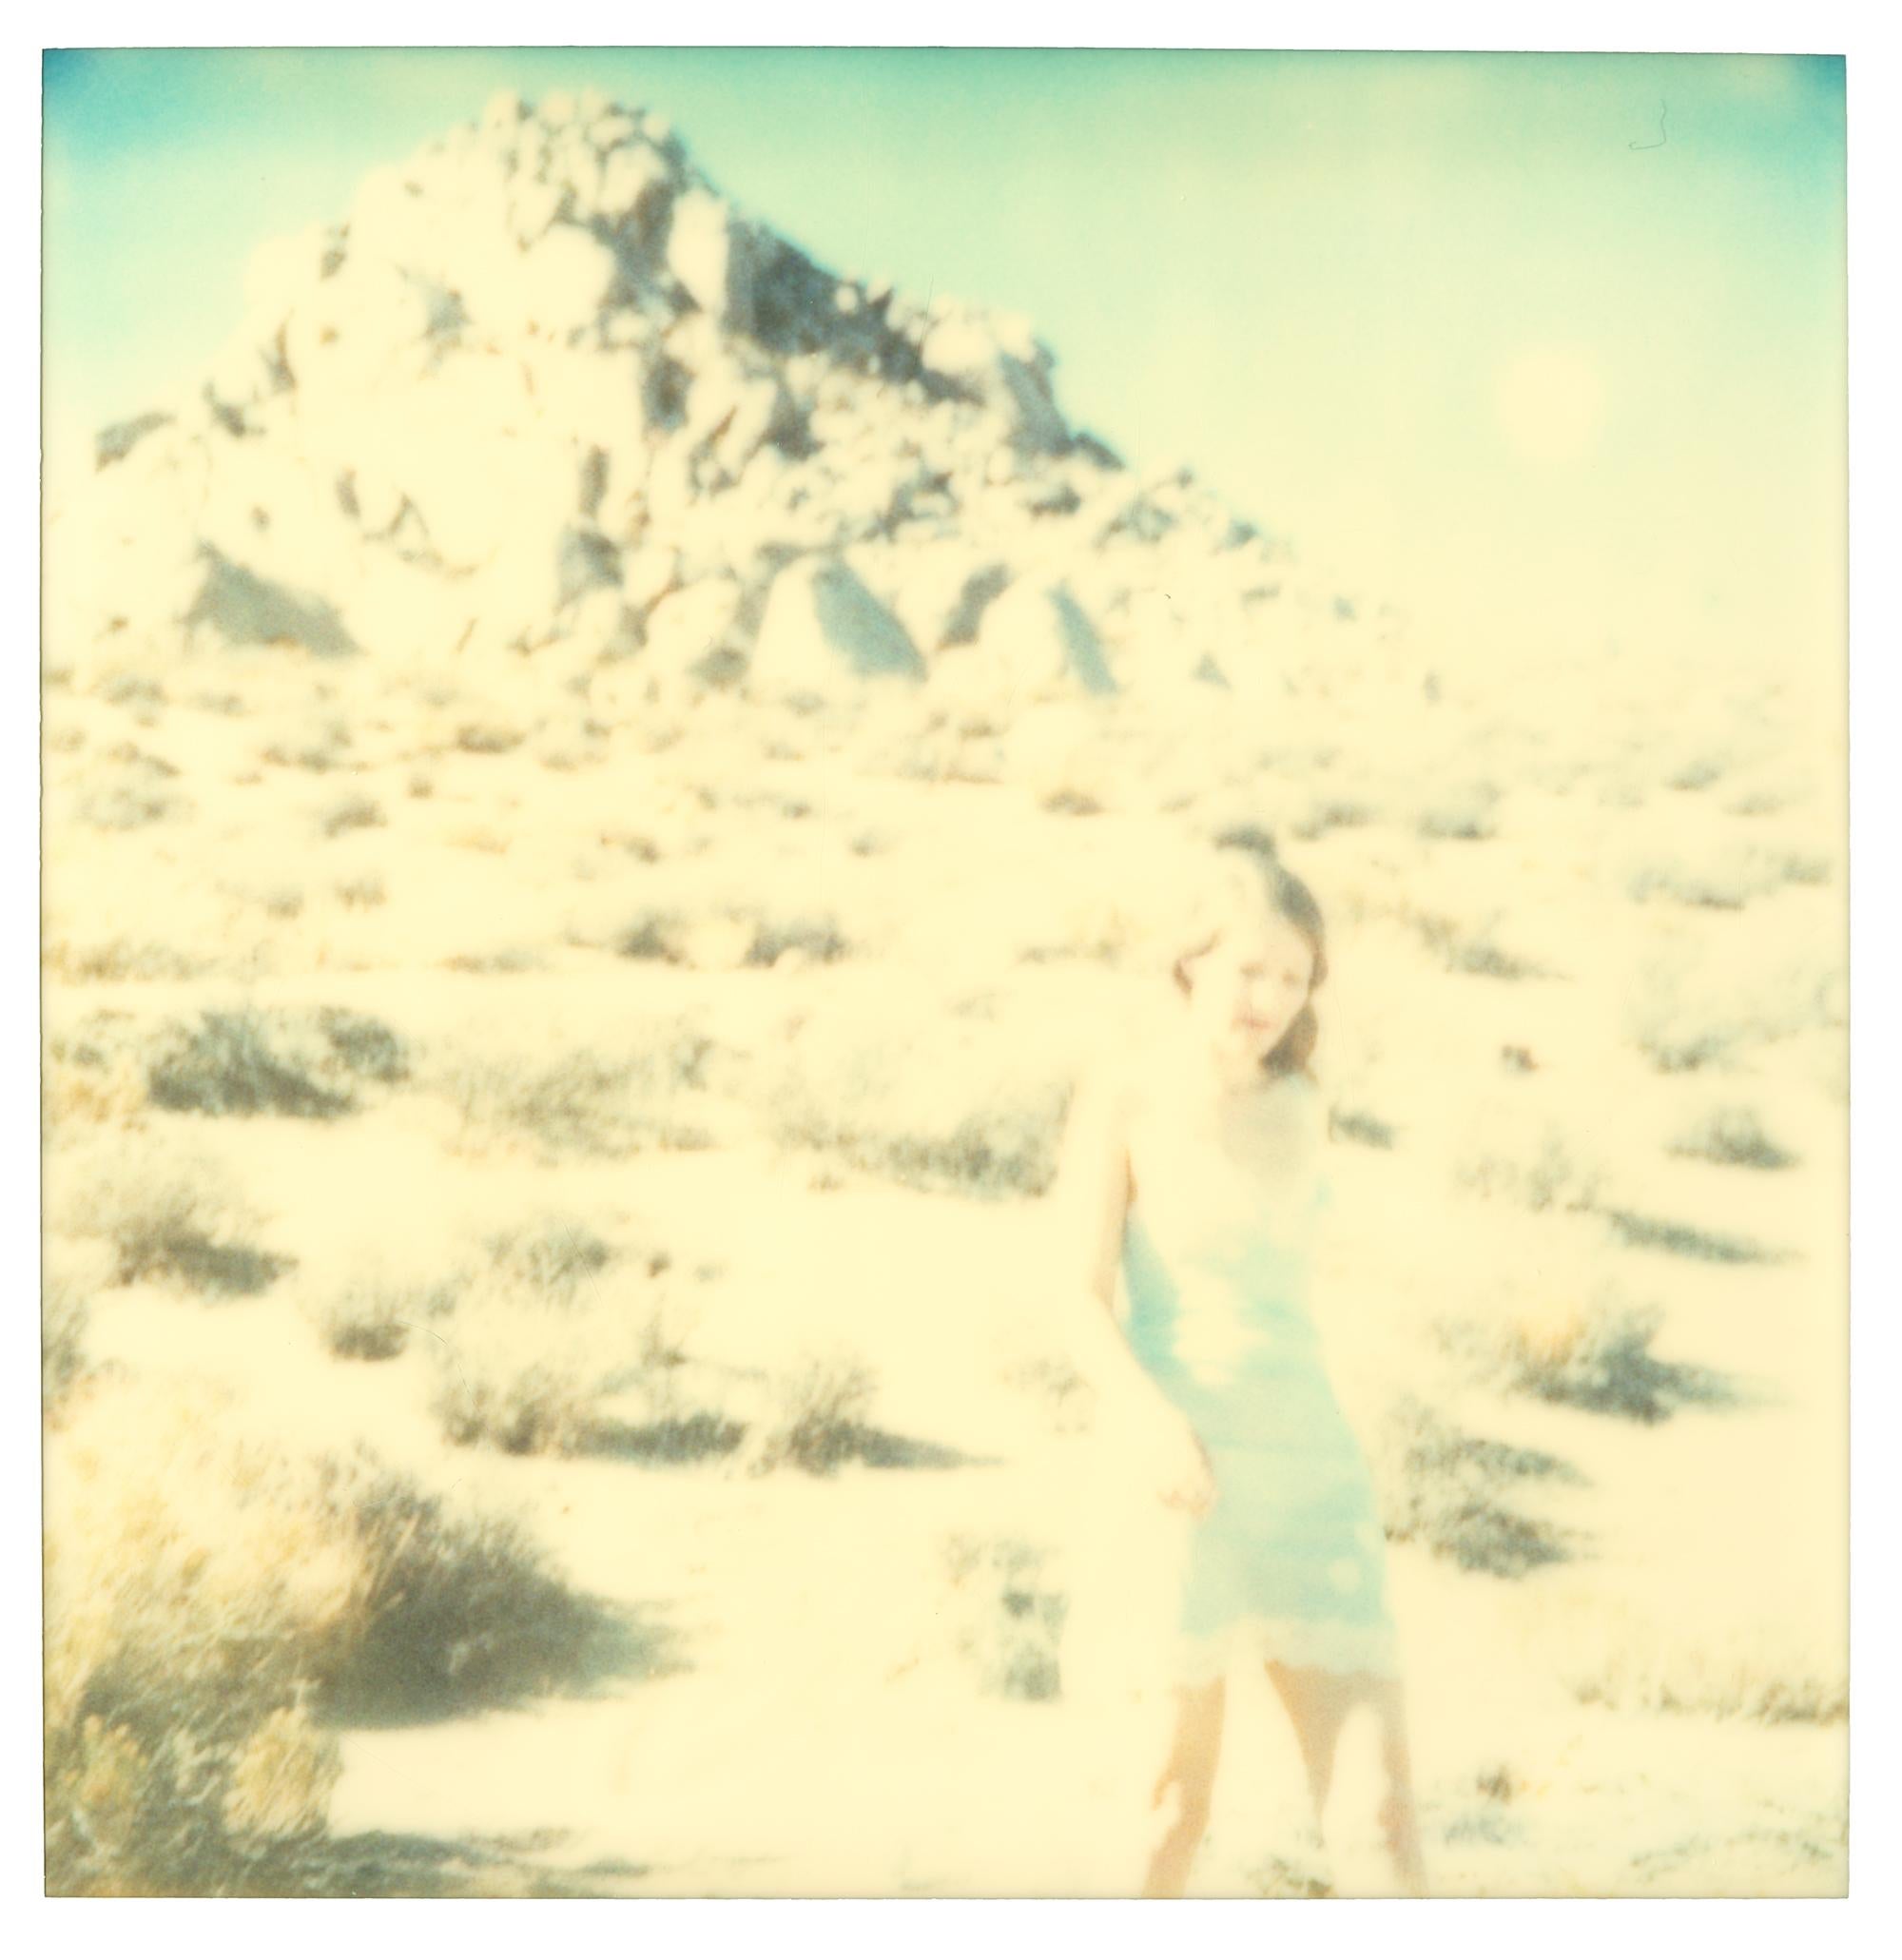 Aimless (Wastelands), triptych, analog - Polaroid, 21st Century, Color - Contemporary Photograph by Stefanie Schneider